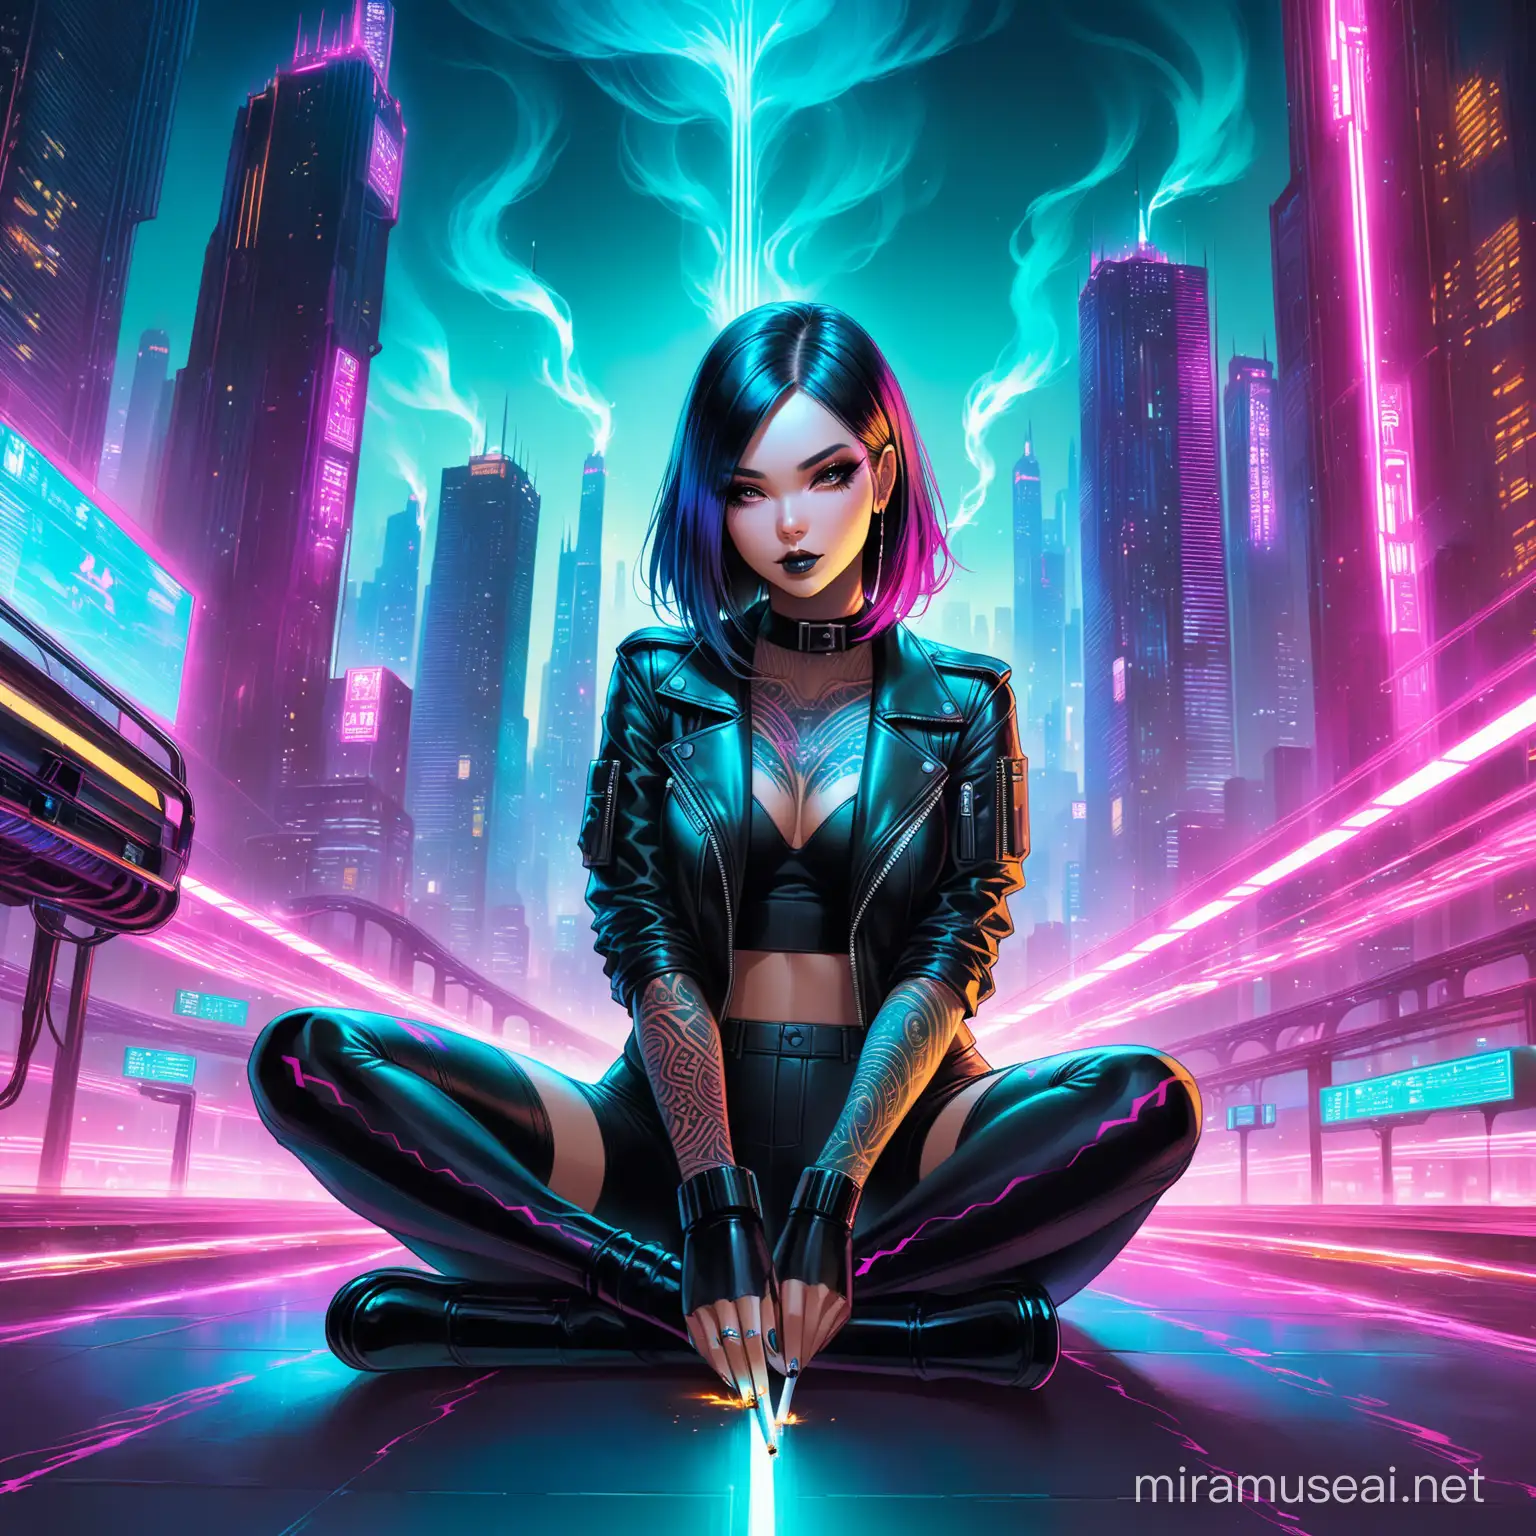 Gothic Woman Smoking in Cyberpunk Cityscape